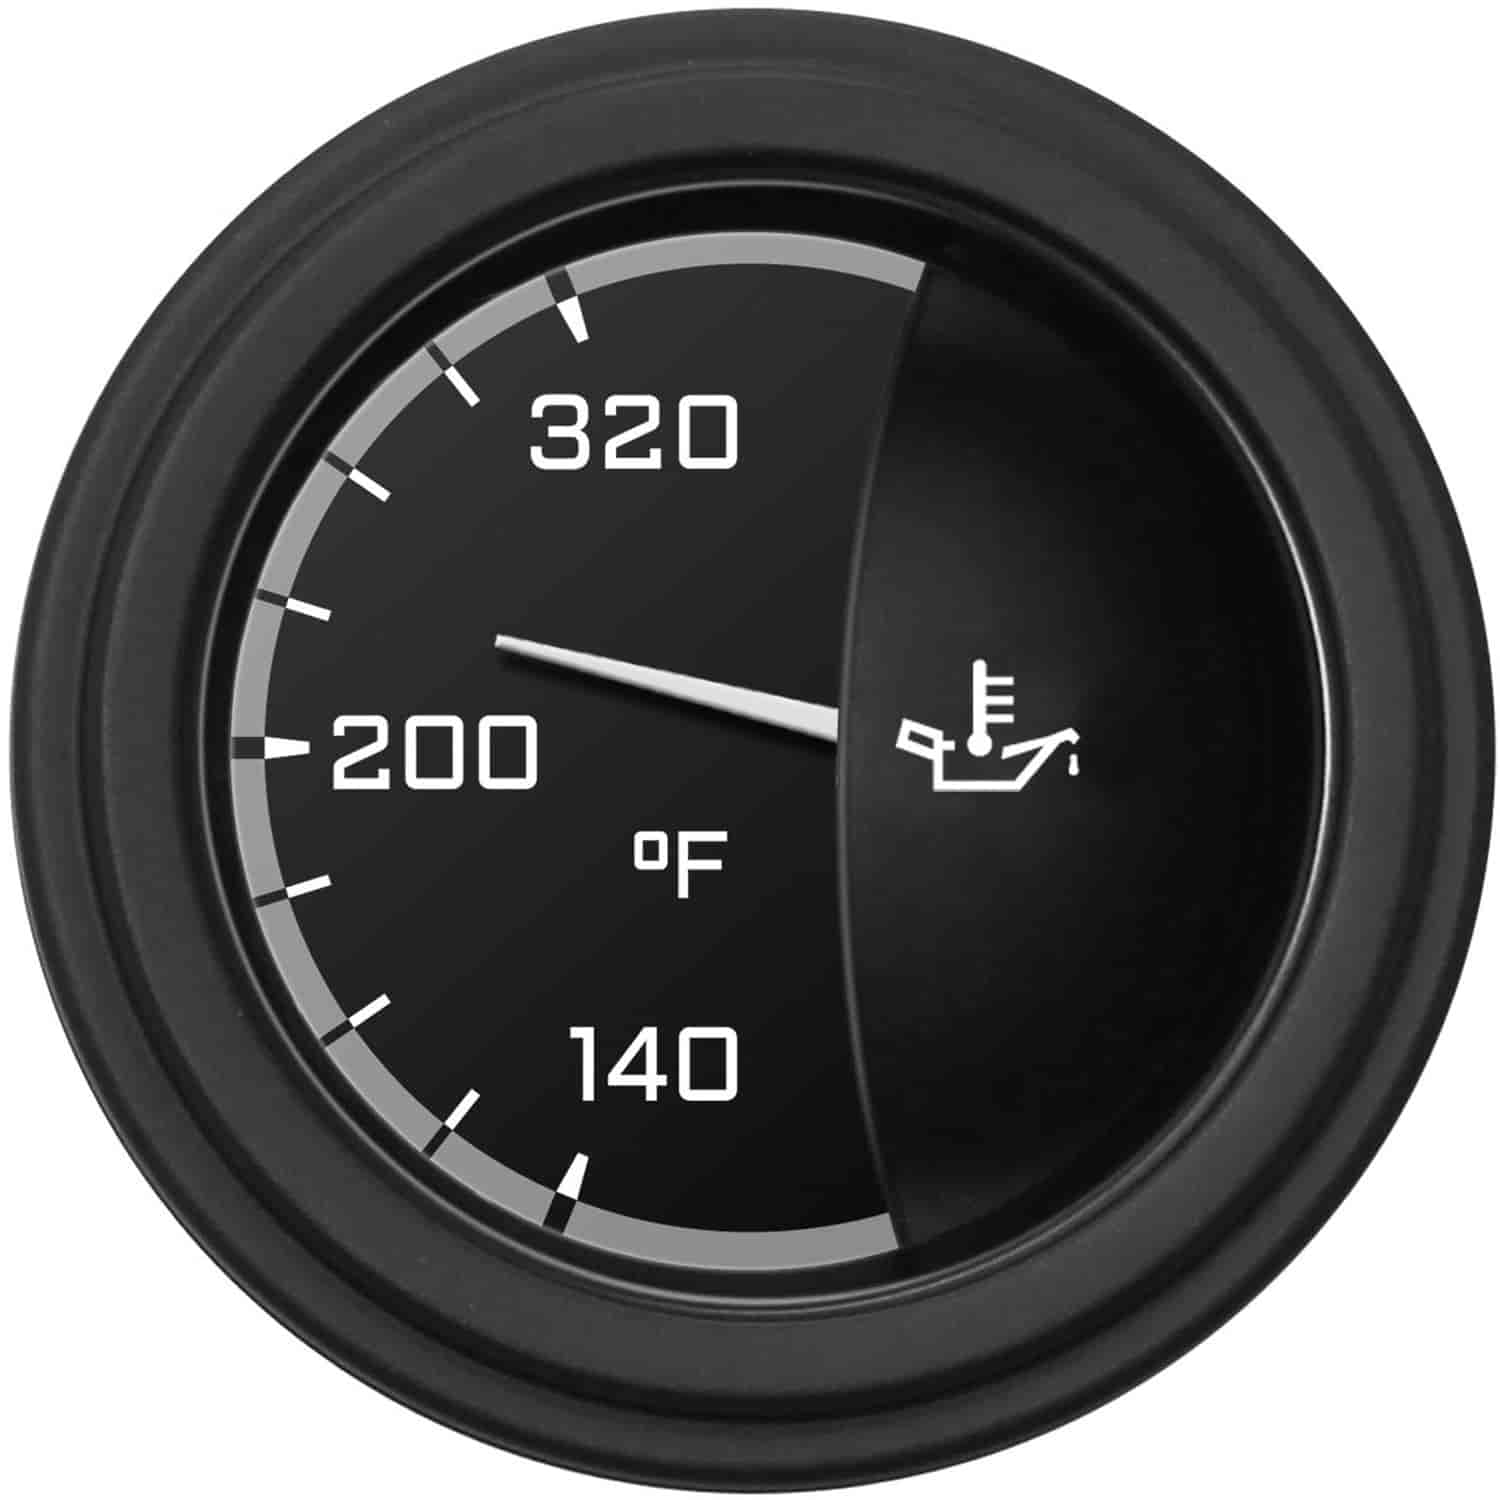 Gray AutoCross Series Oil Temperature Gauge 2-1/8" Electrical